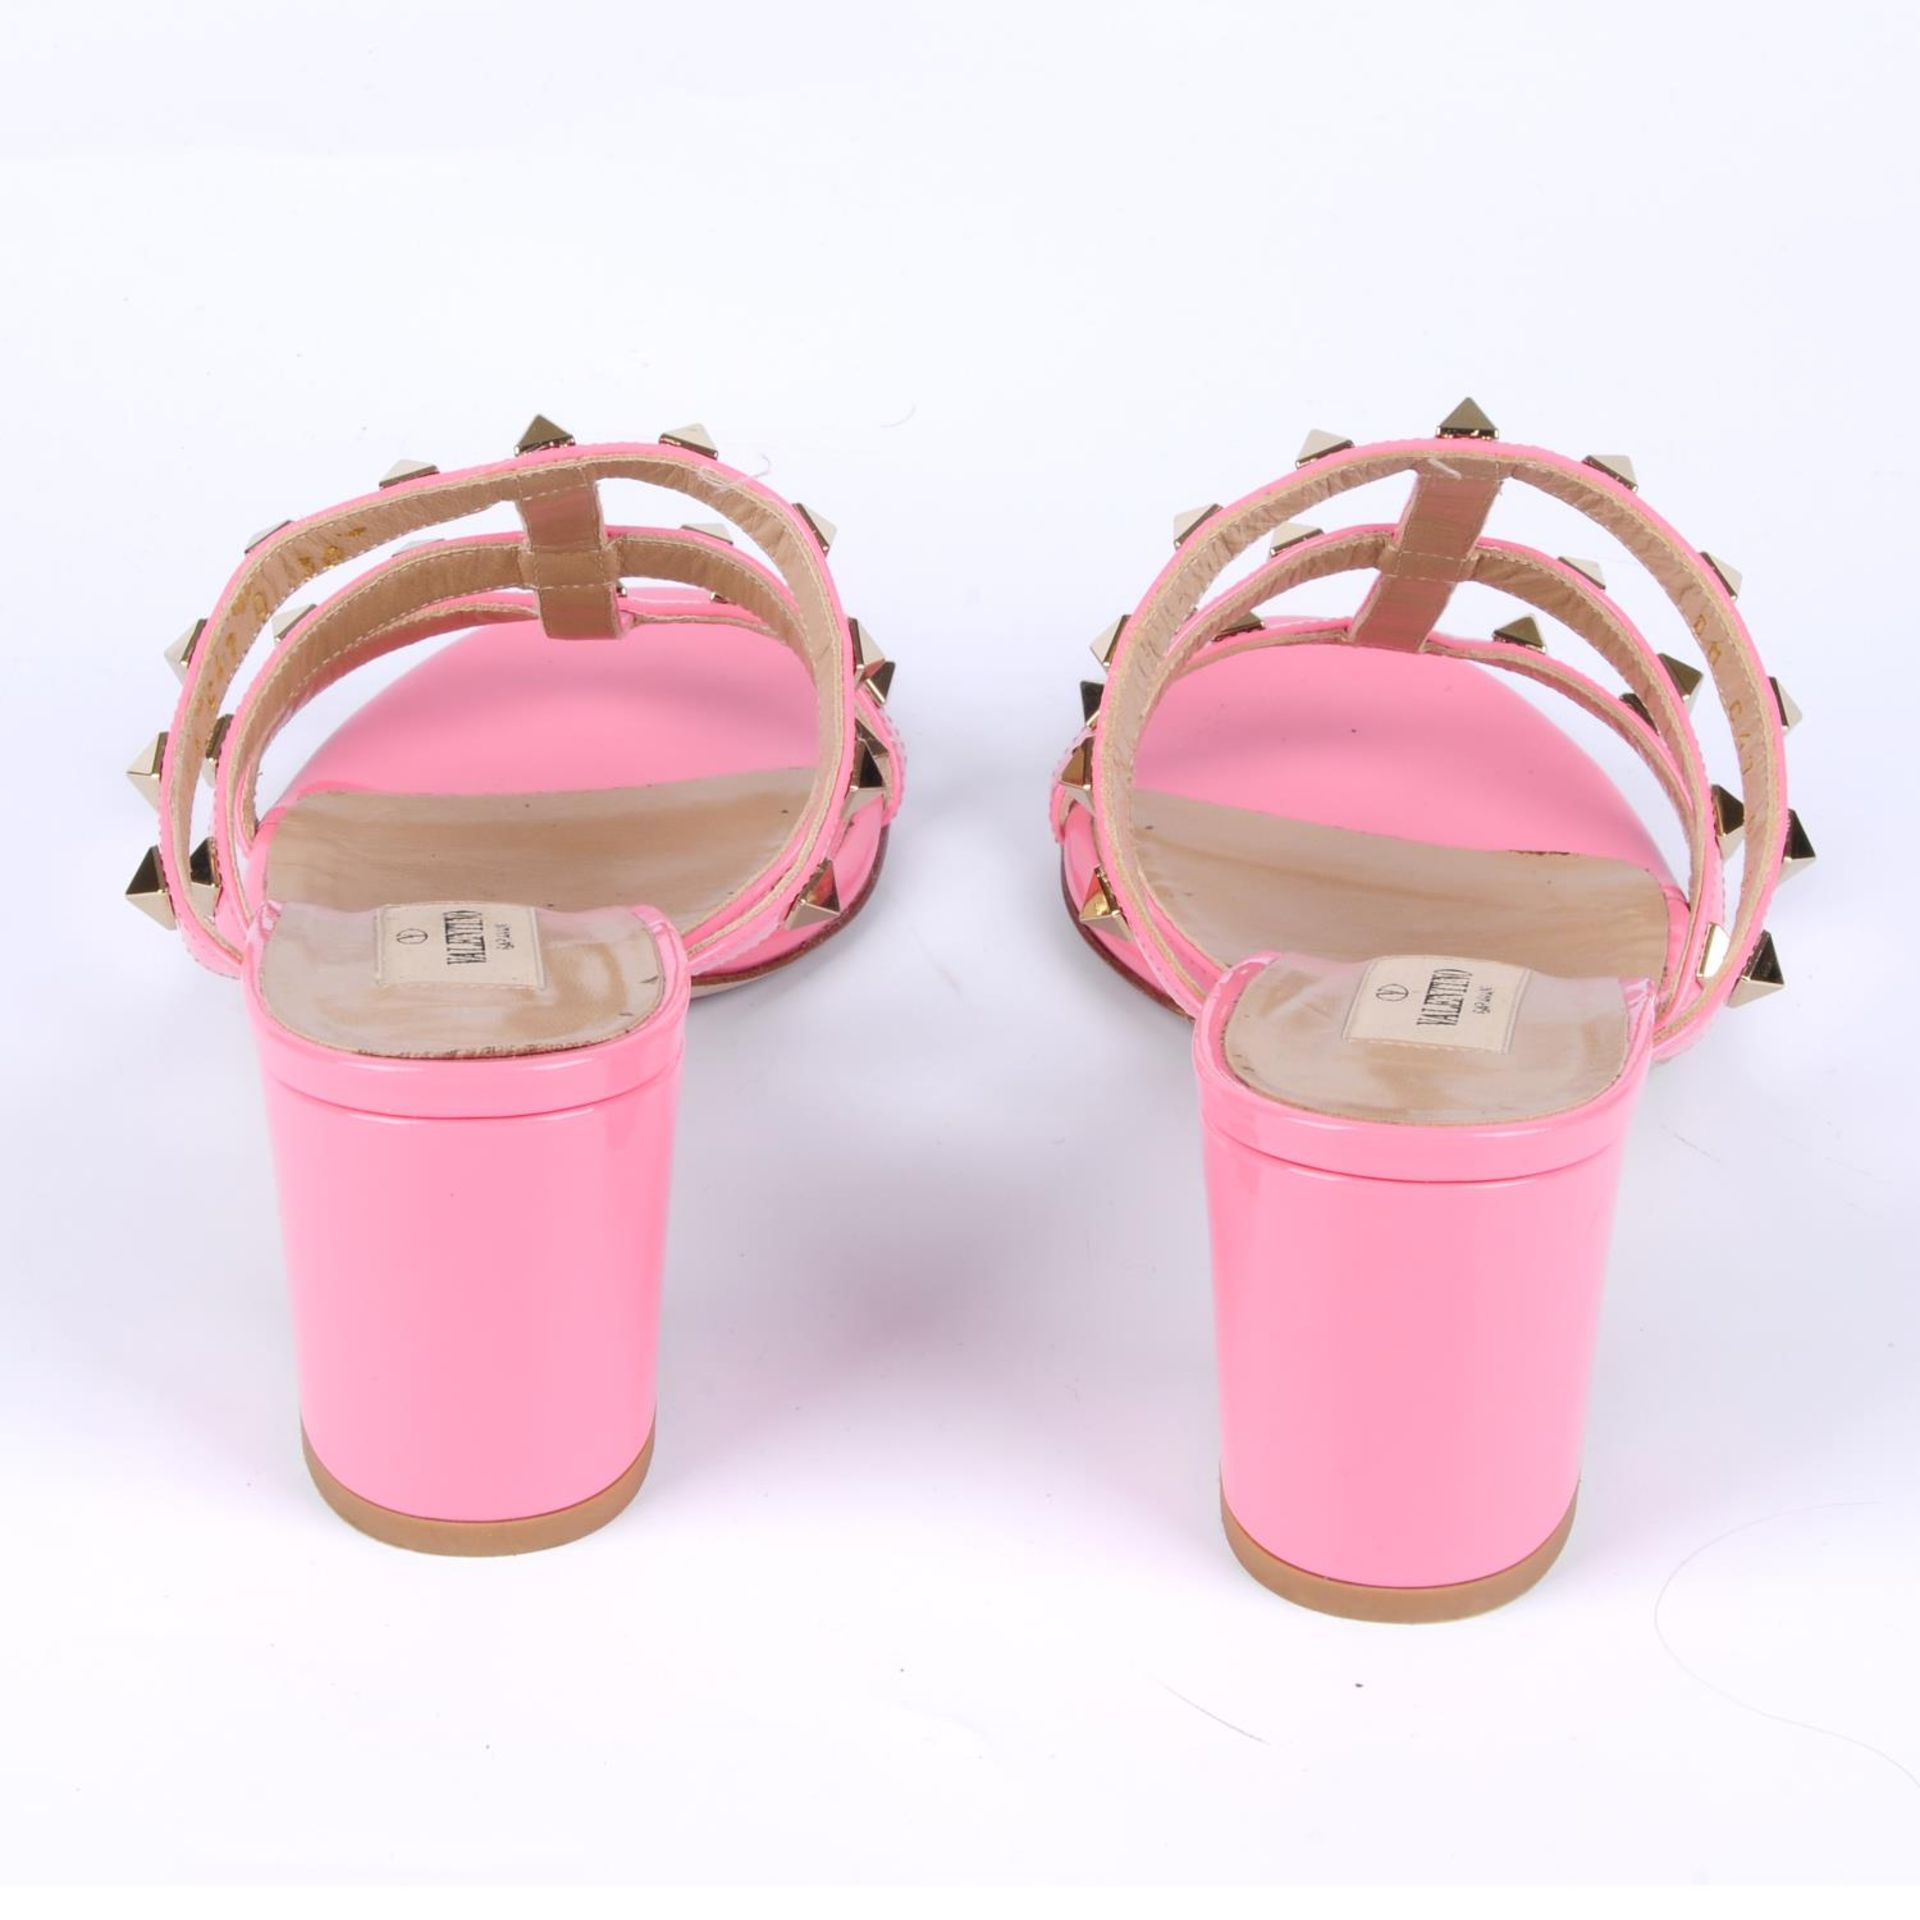 VALENTINO - a pair of pink patent leather Rockstud slip-on sandals. - Bild 2 aus 4